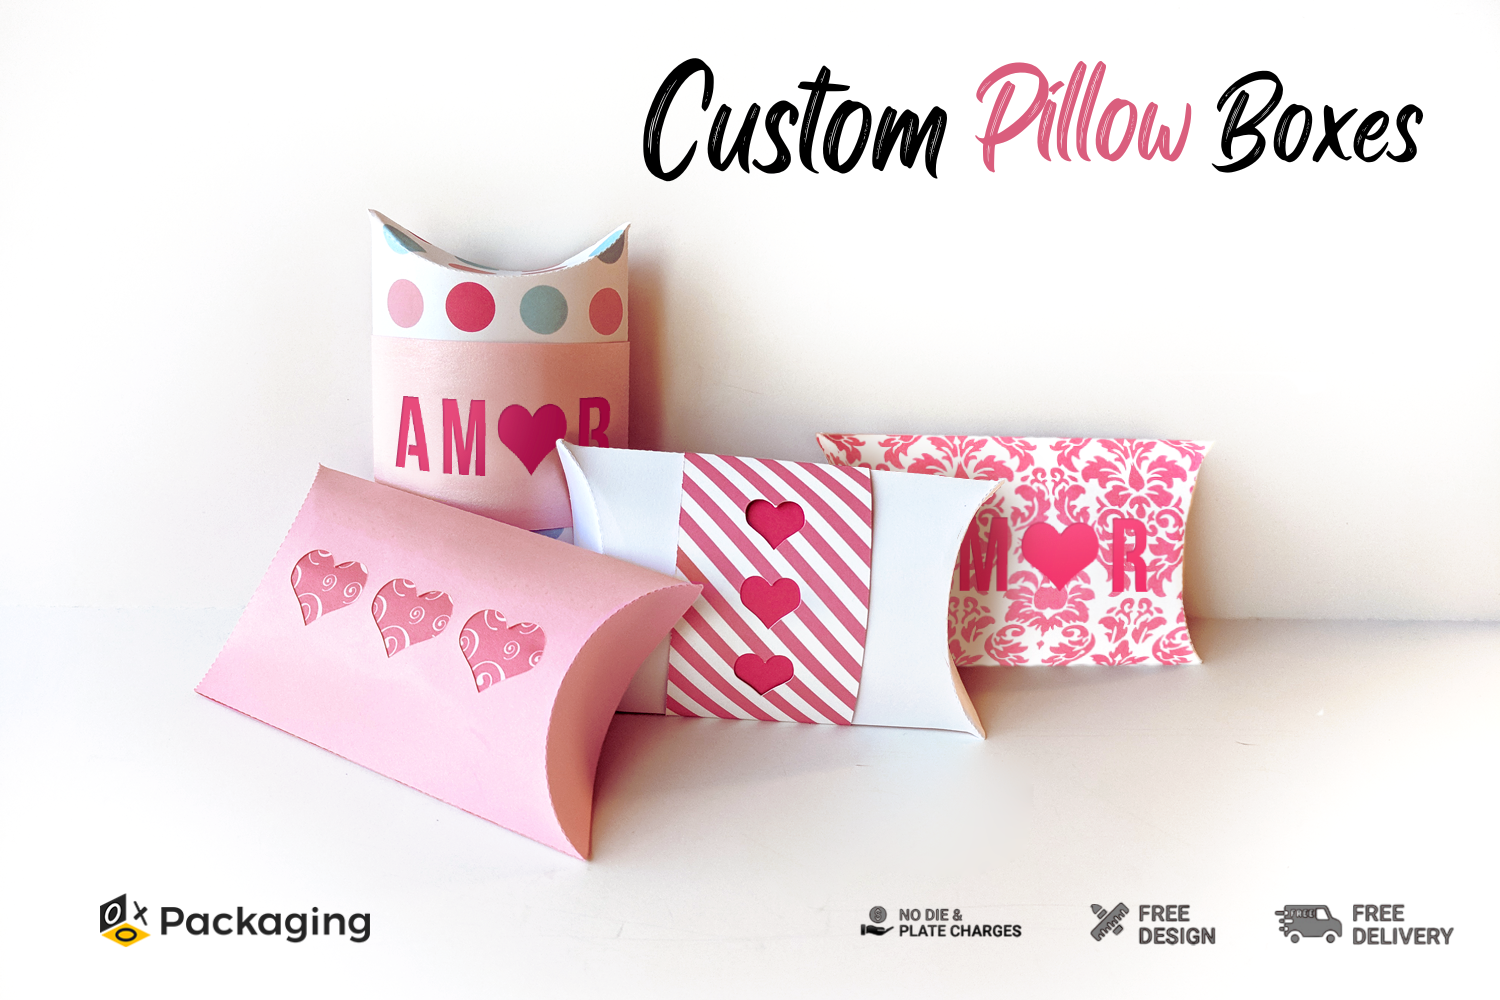 Customized Pillow Boxes